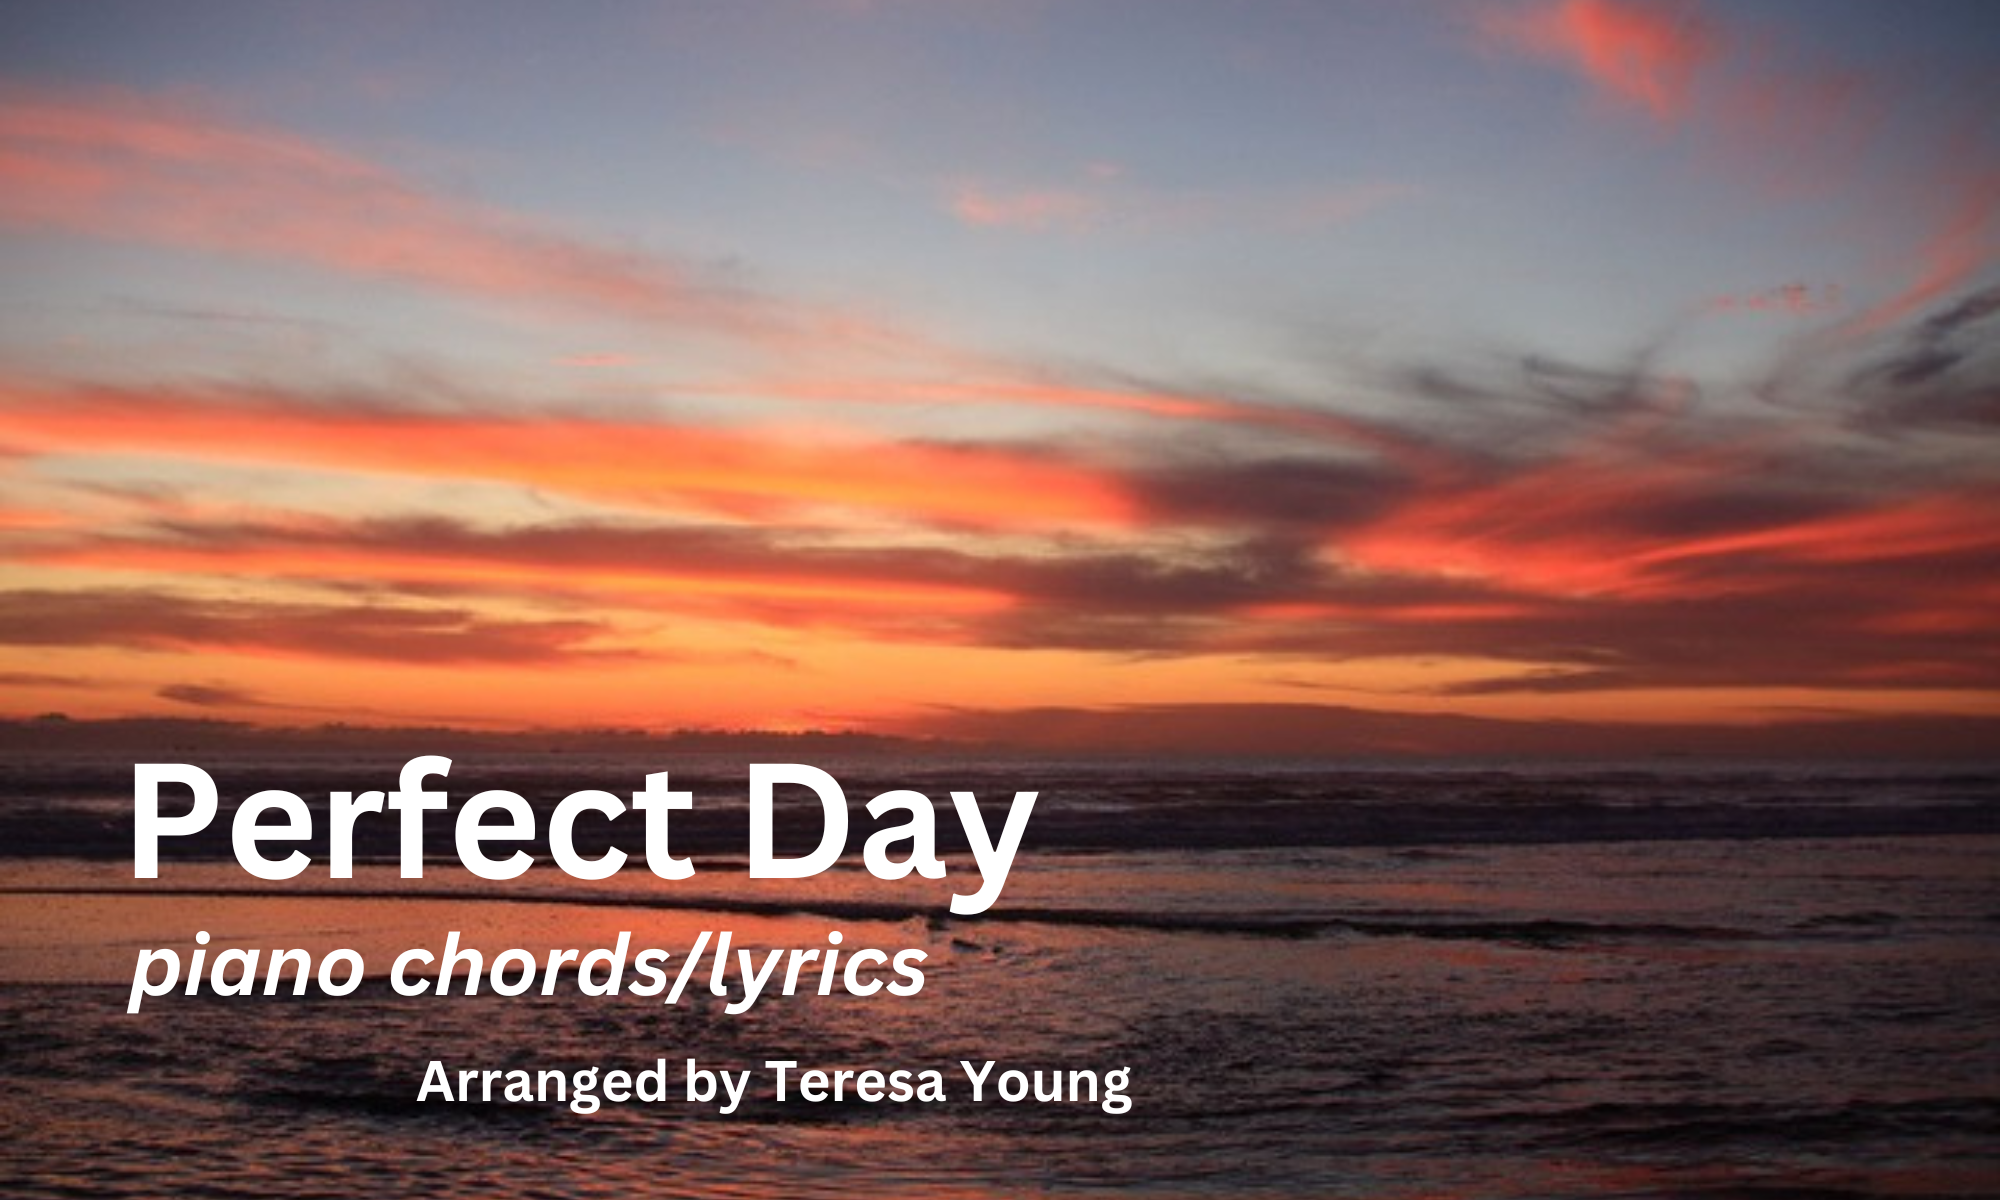 Perfect Day, piano chords & lyrics arr. Teresa Young